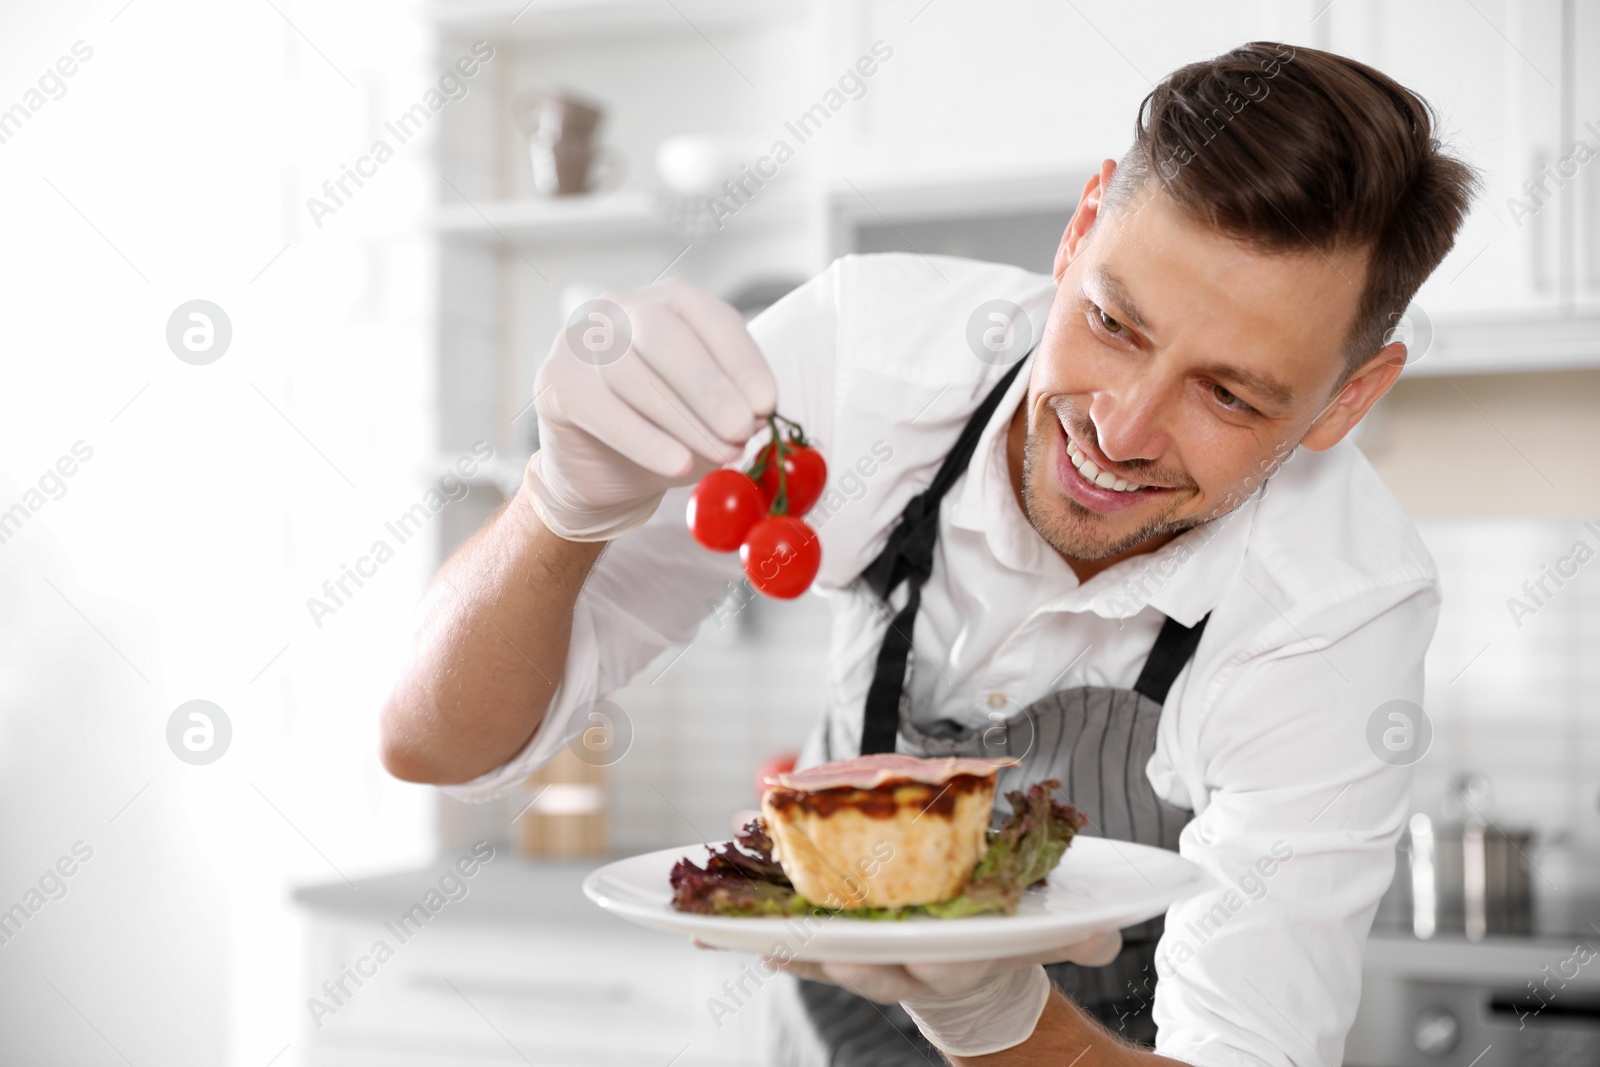 Photo of Professional chef presenting delicious dish in kitchen